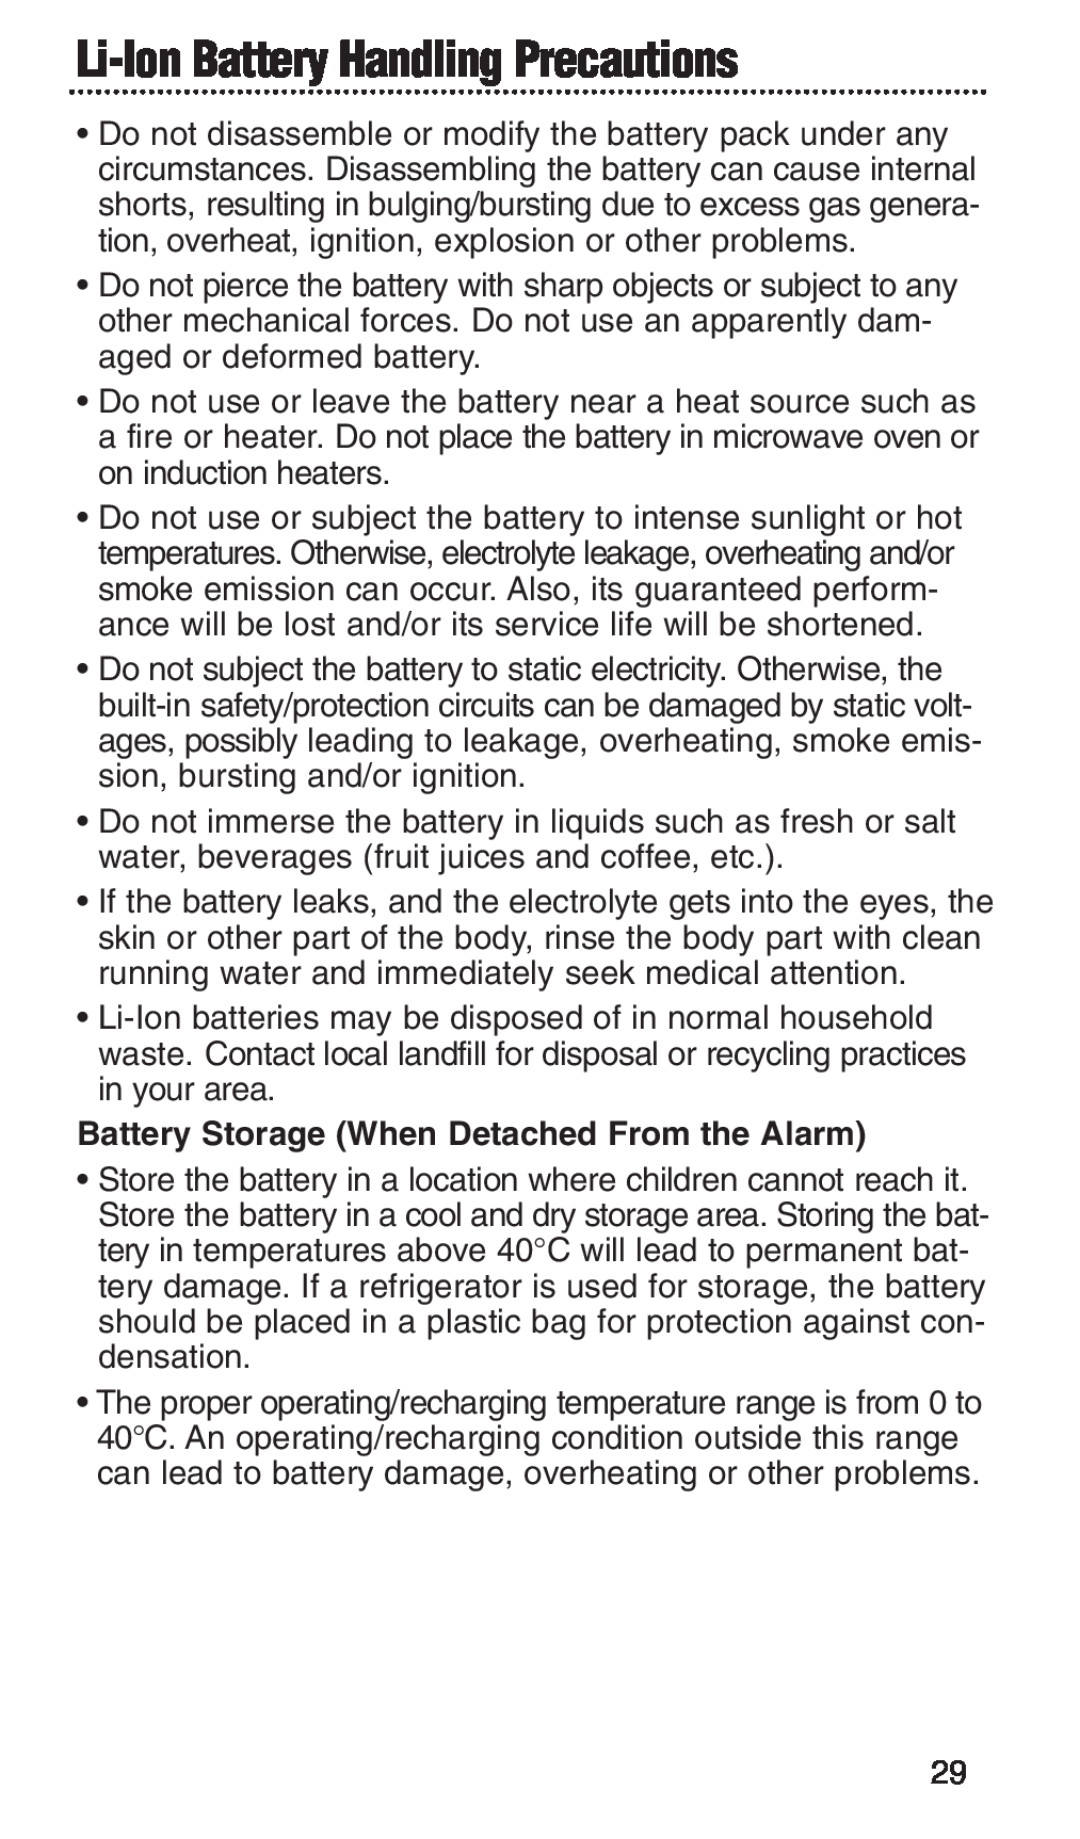 Kidde KN-COPP-3-RC manual Li-IonBattery Handling Precautions, Battery Storage When Detached From the Alarm 